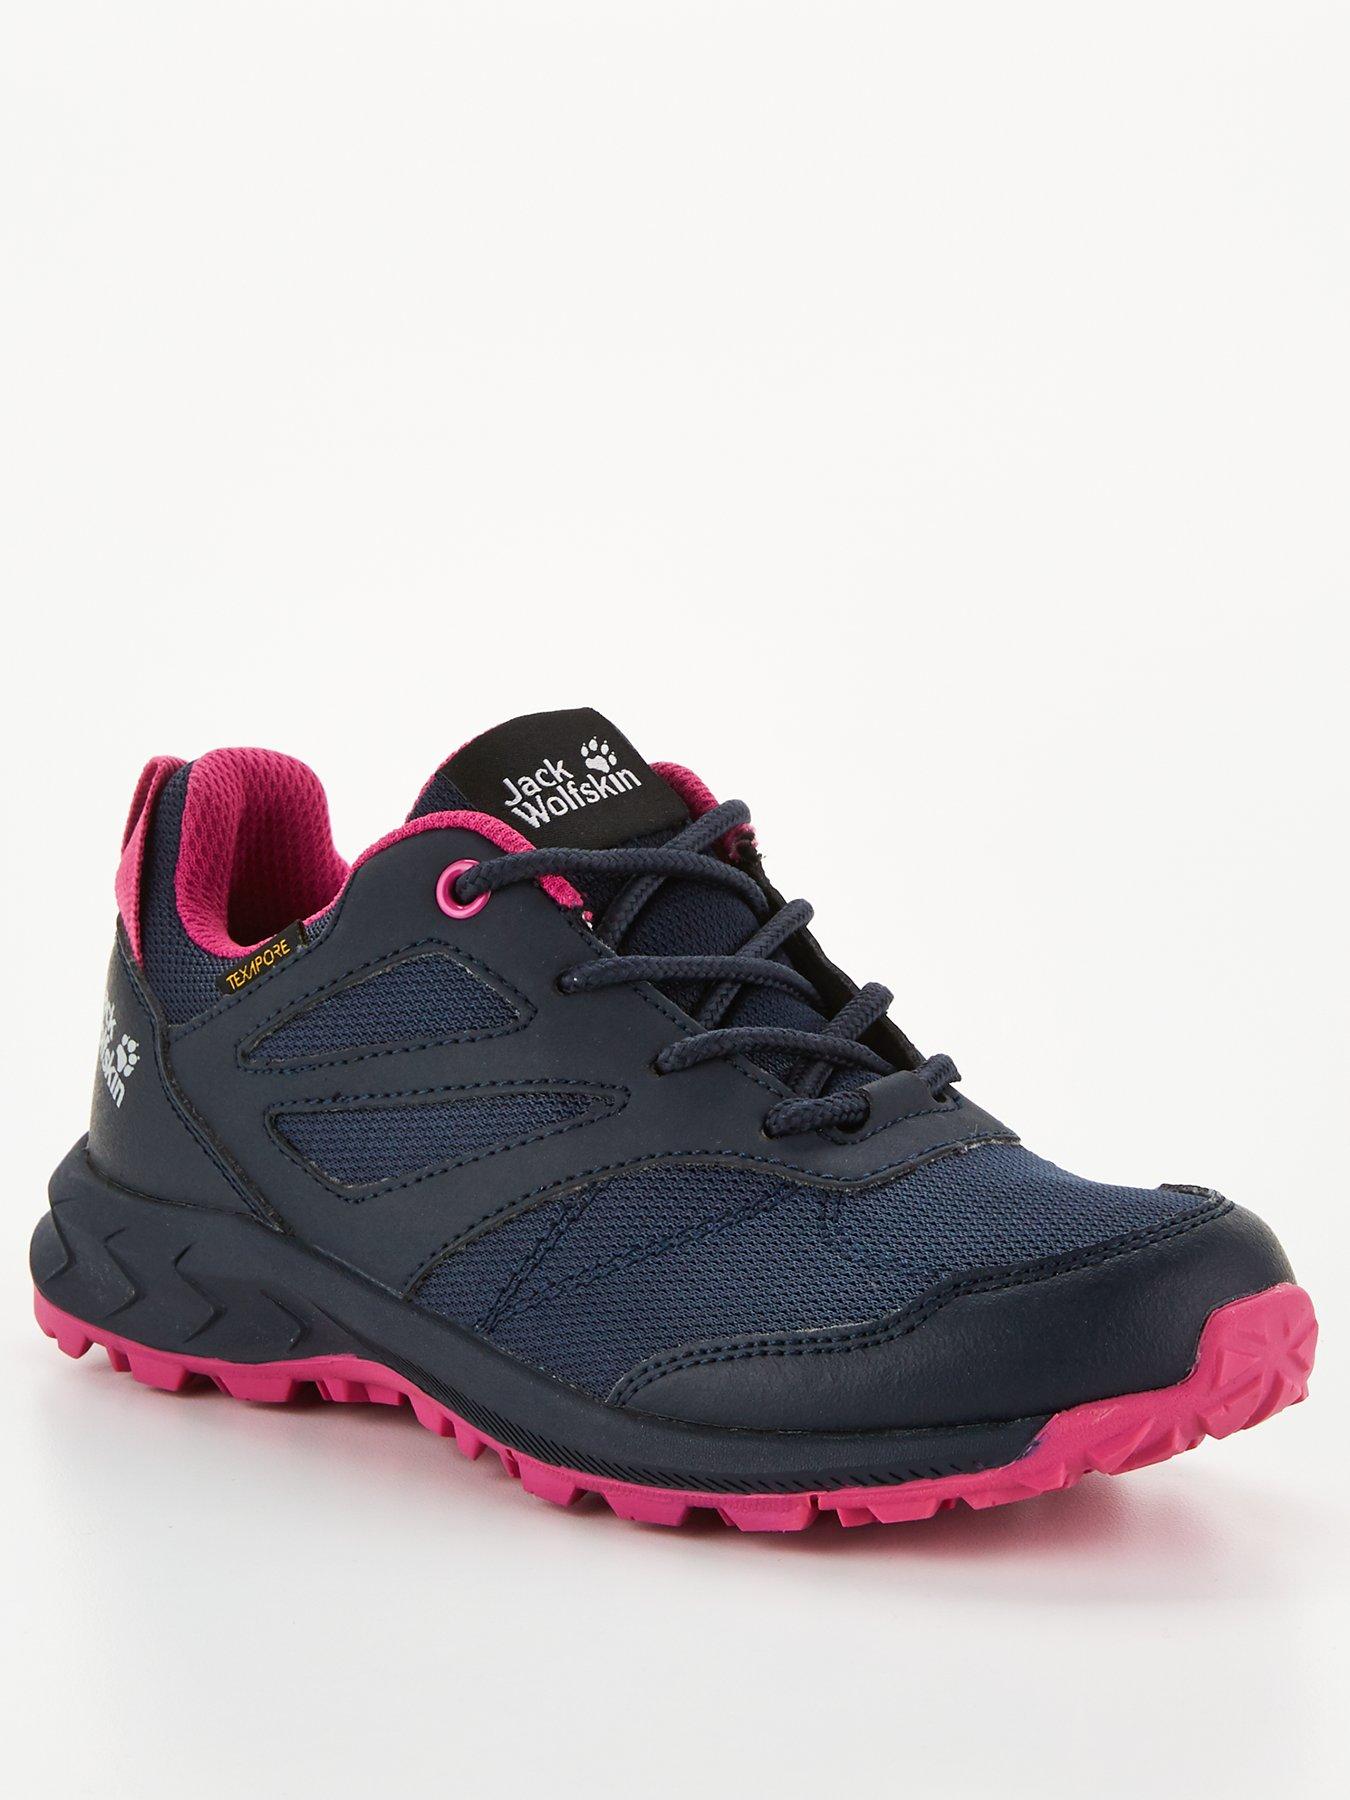  Kids Woodland Waterproof Low Hiking Boots - Blue/Pink